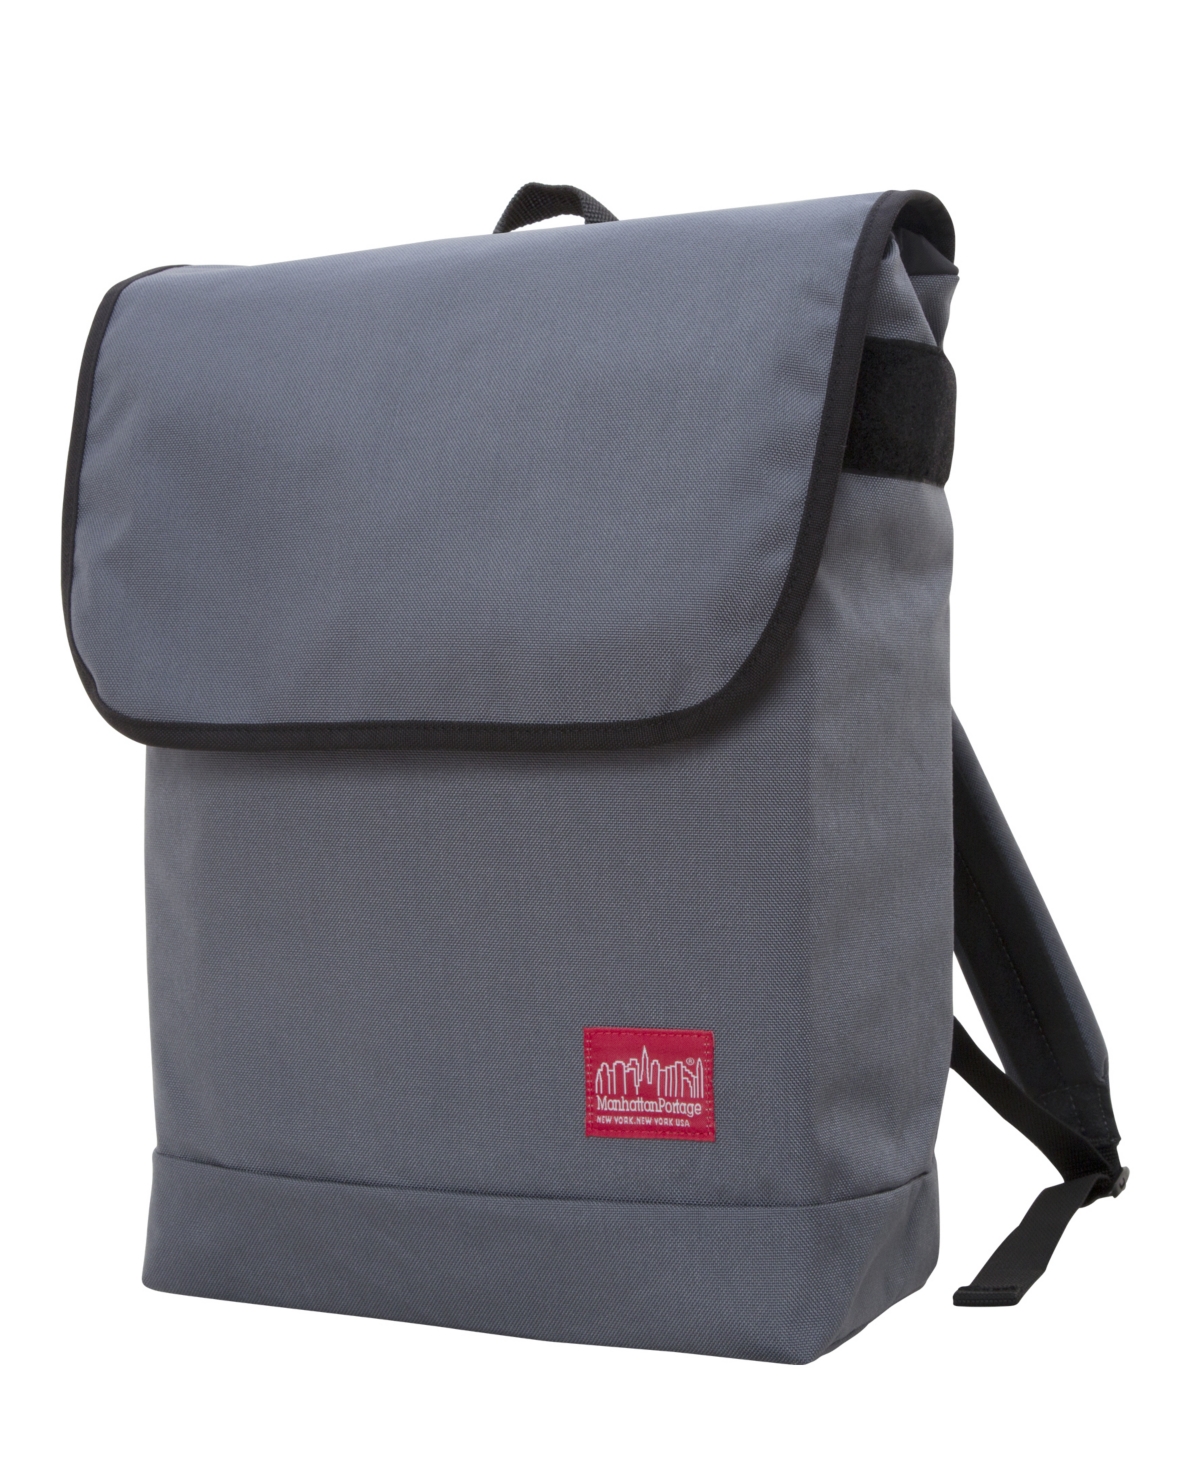 Gramercy Backpack - Gray